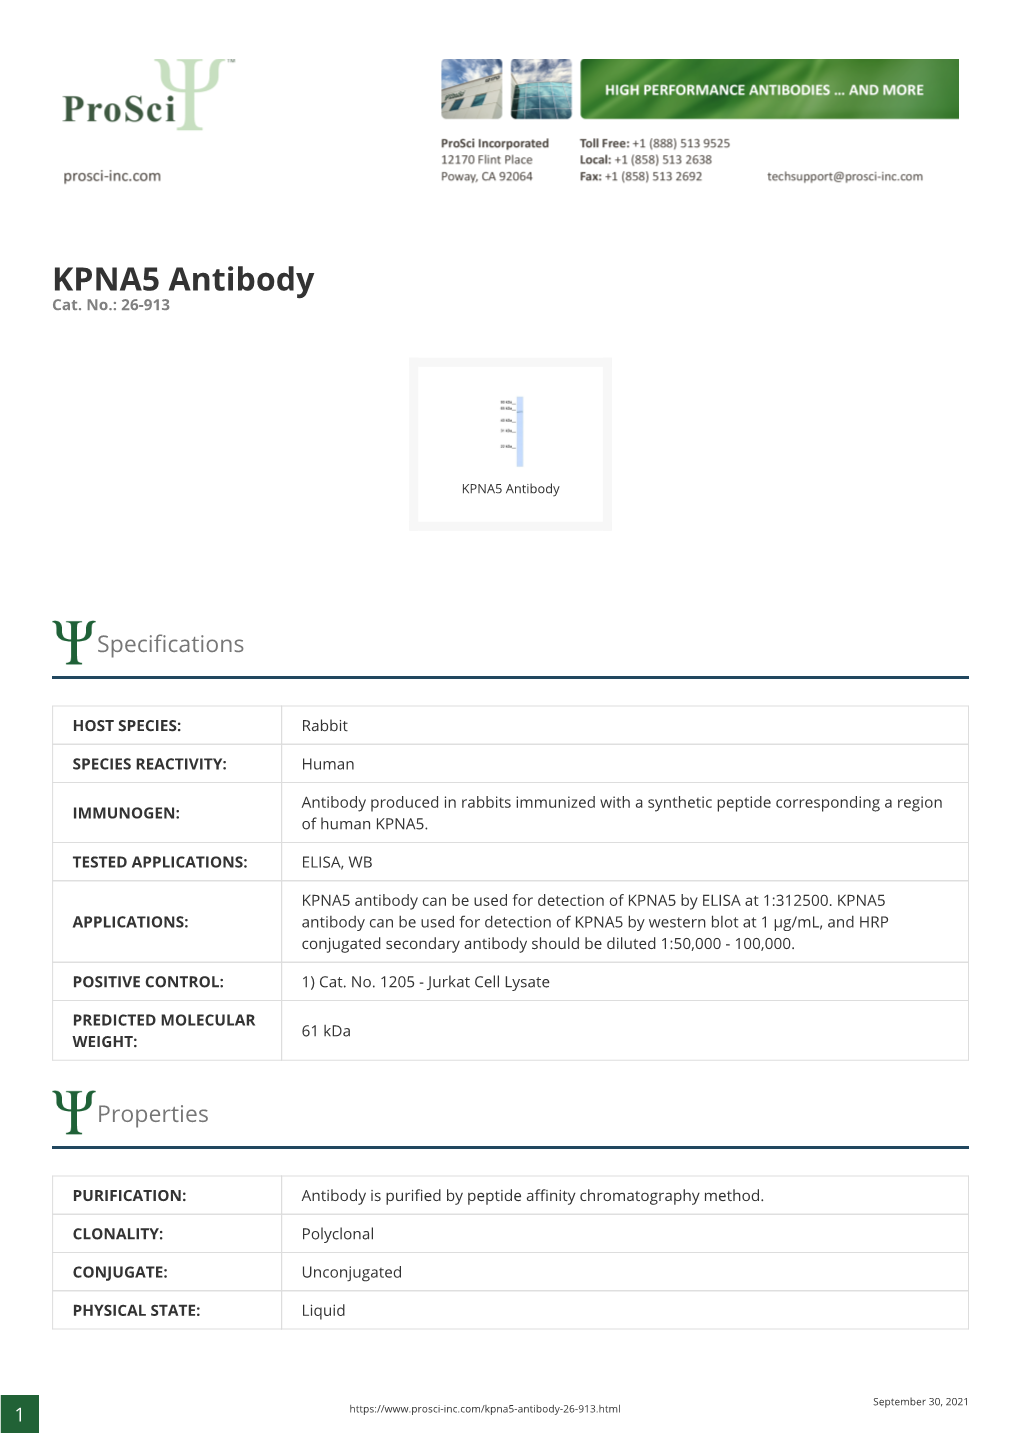 KPNA5 Antibody Cat